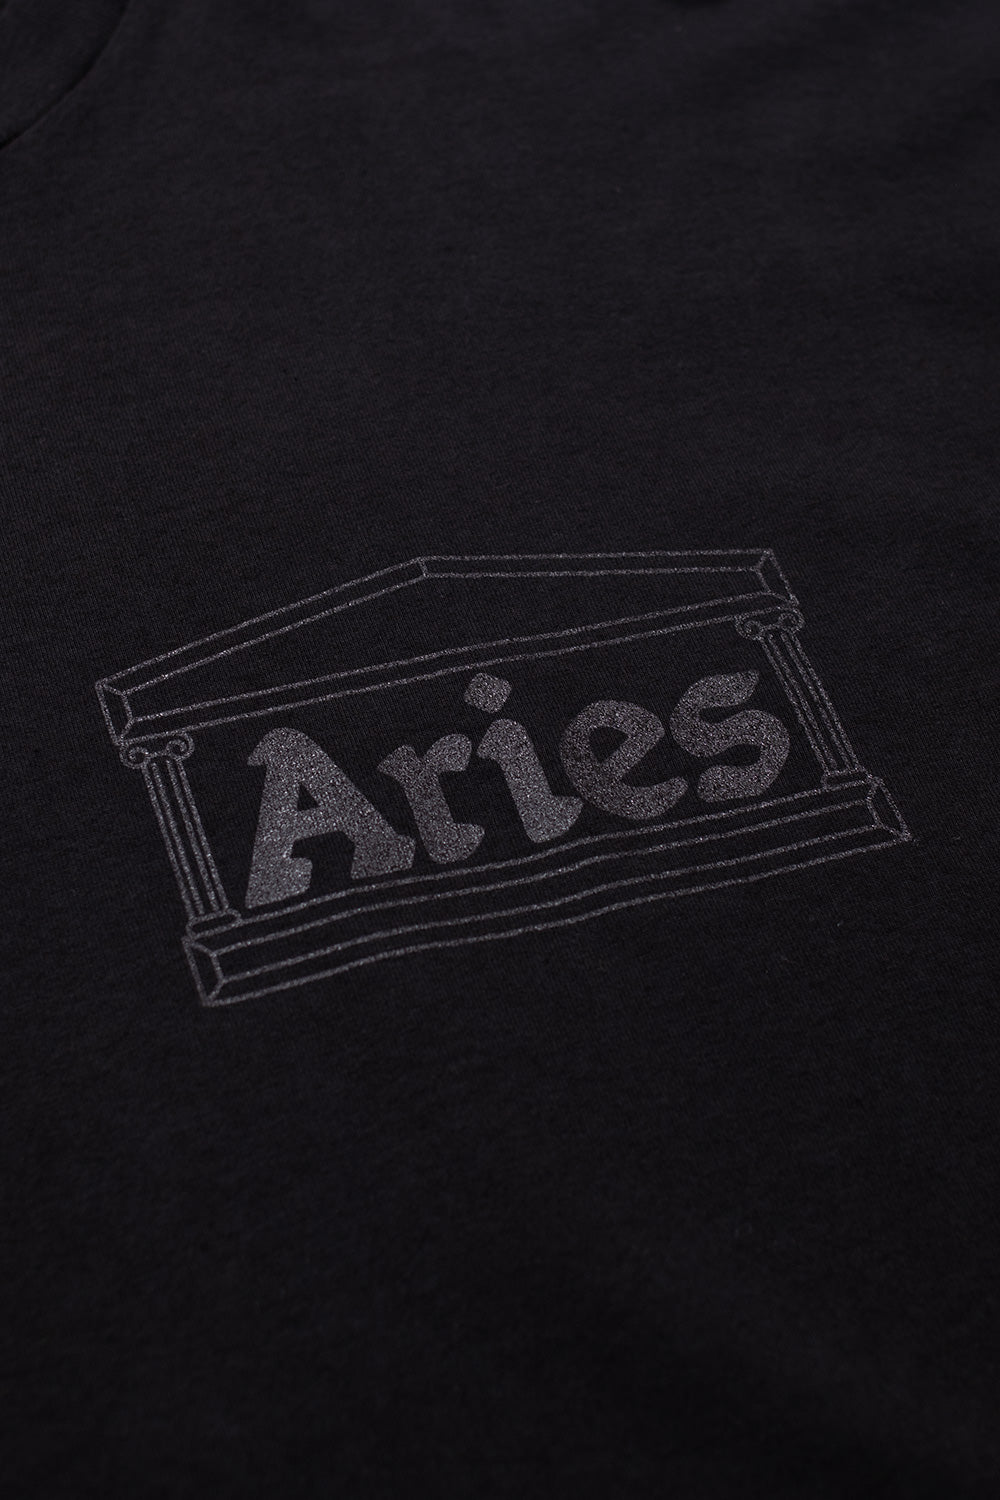 Aries Temple T-Shirt Black - BONKERS